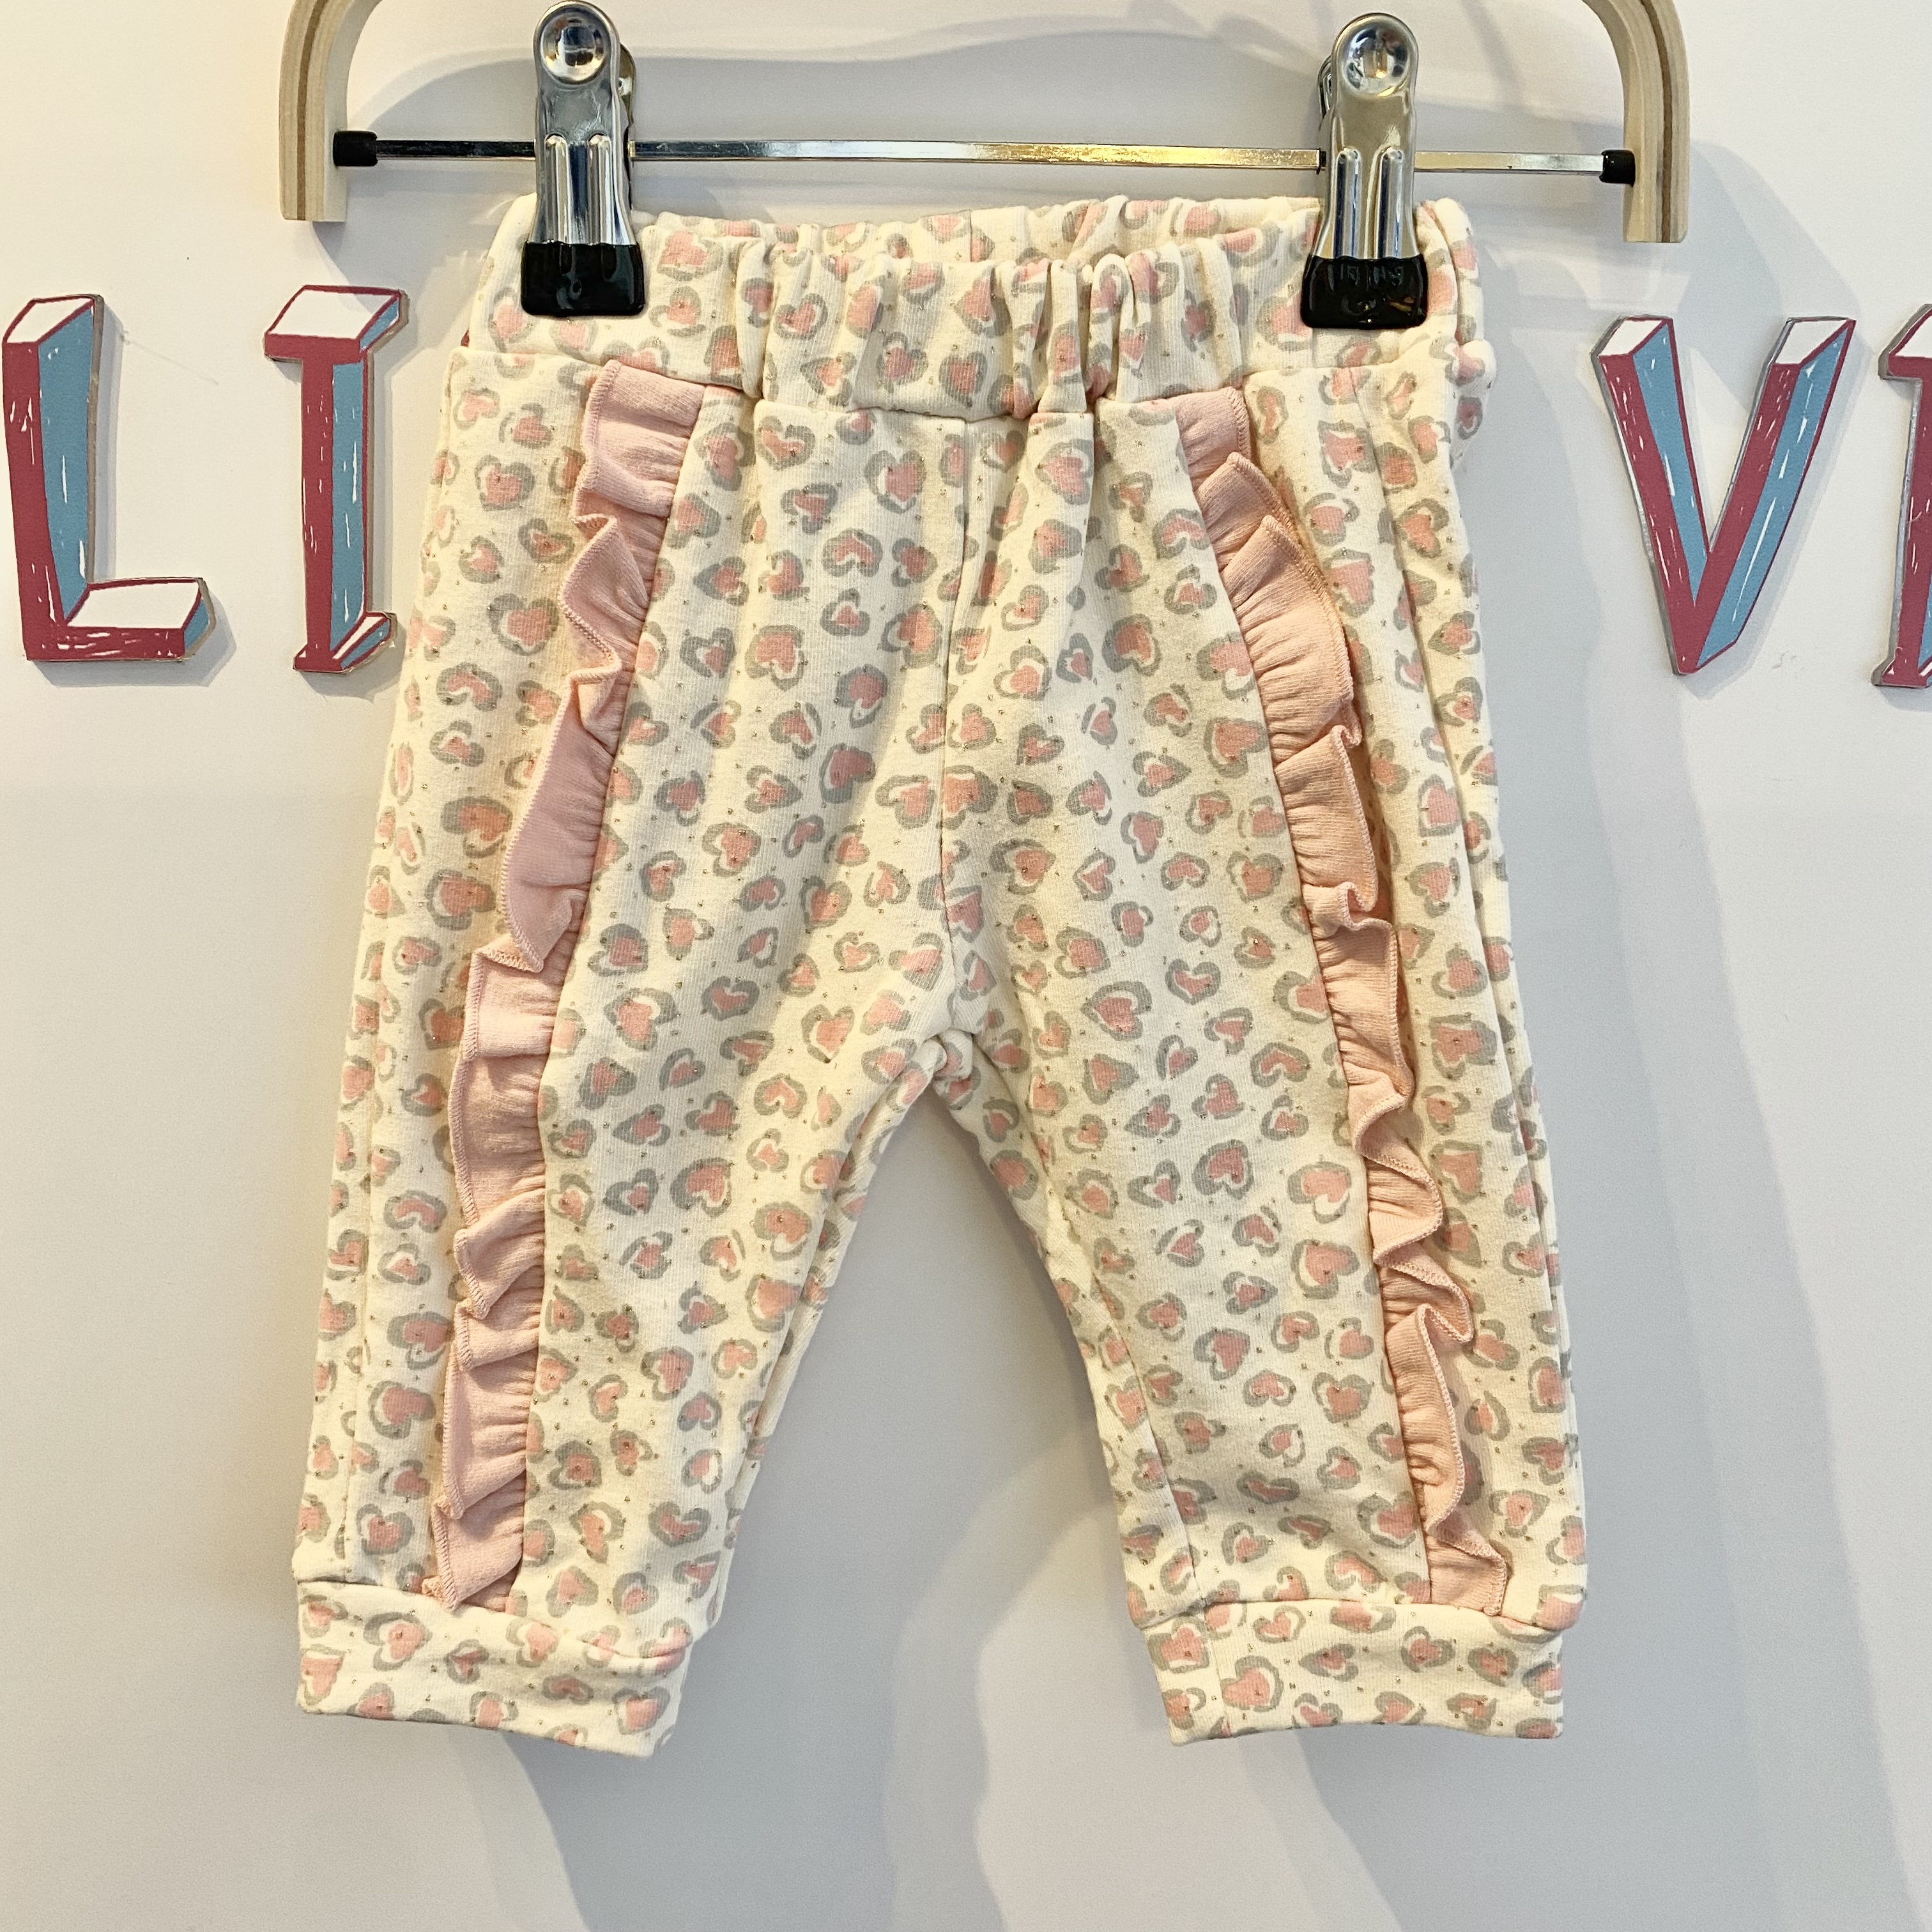 Leopard pants for girls (soft inside)